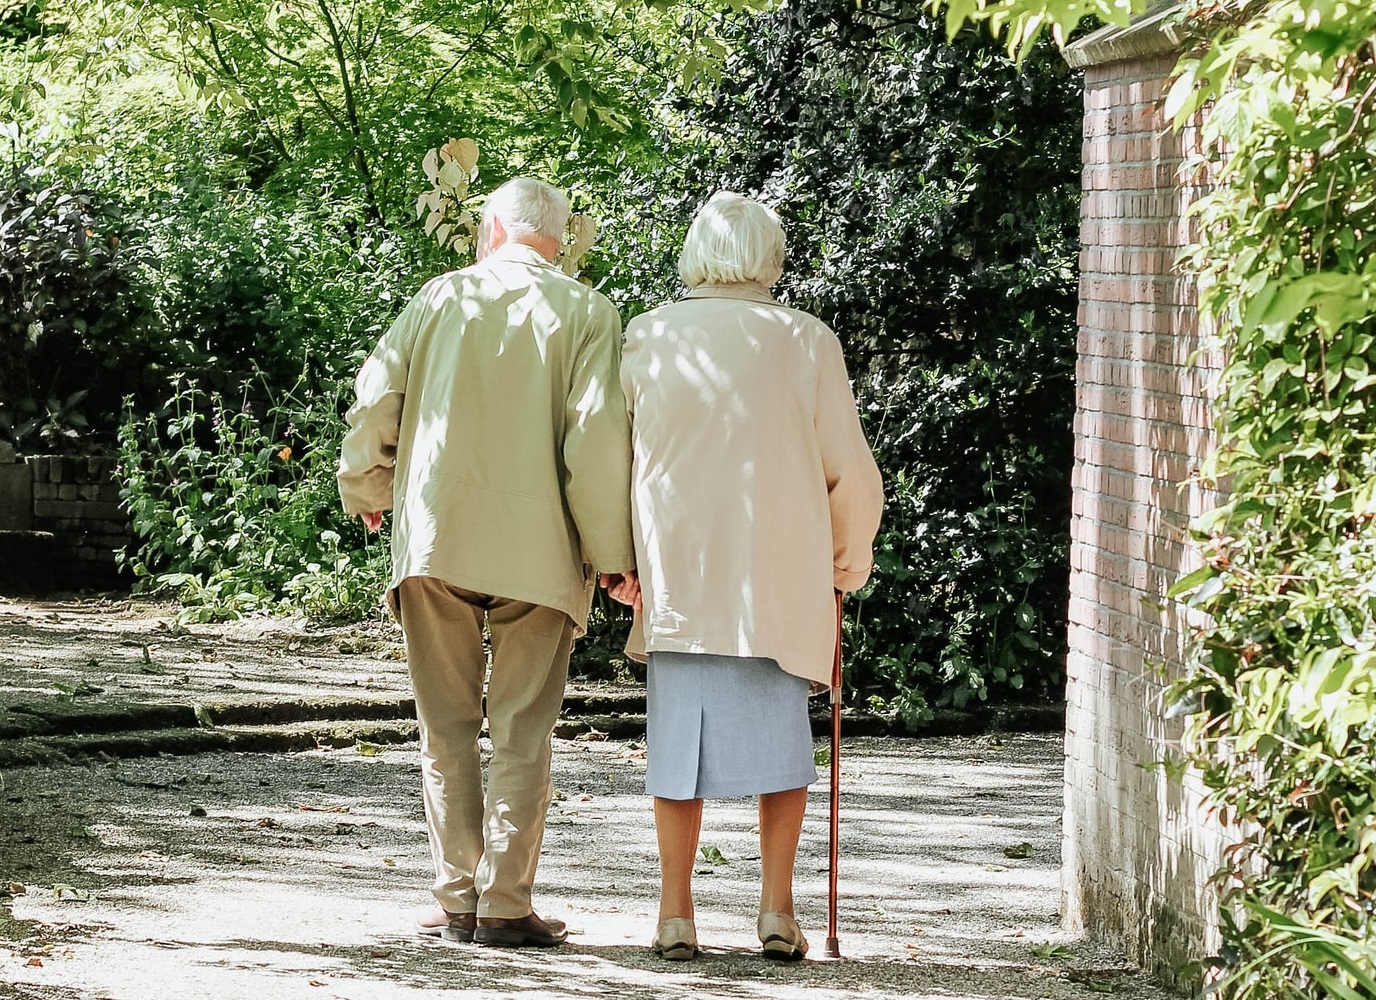 A senior couple walking down a quiet lane